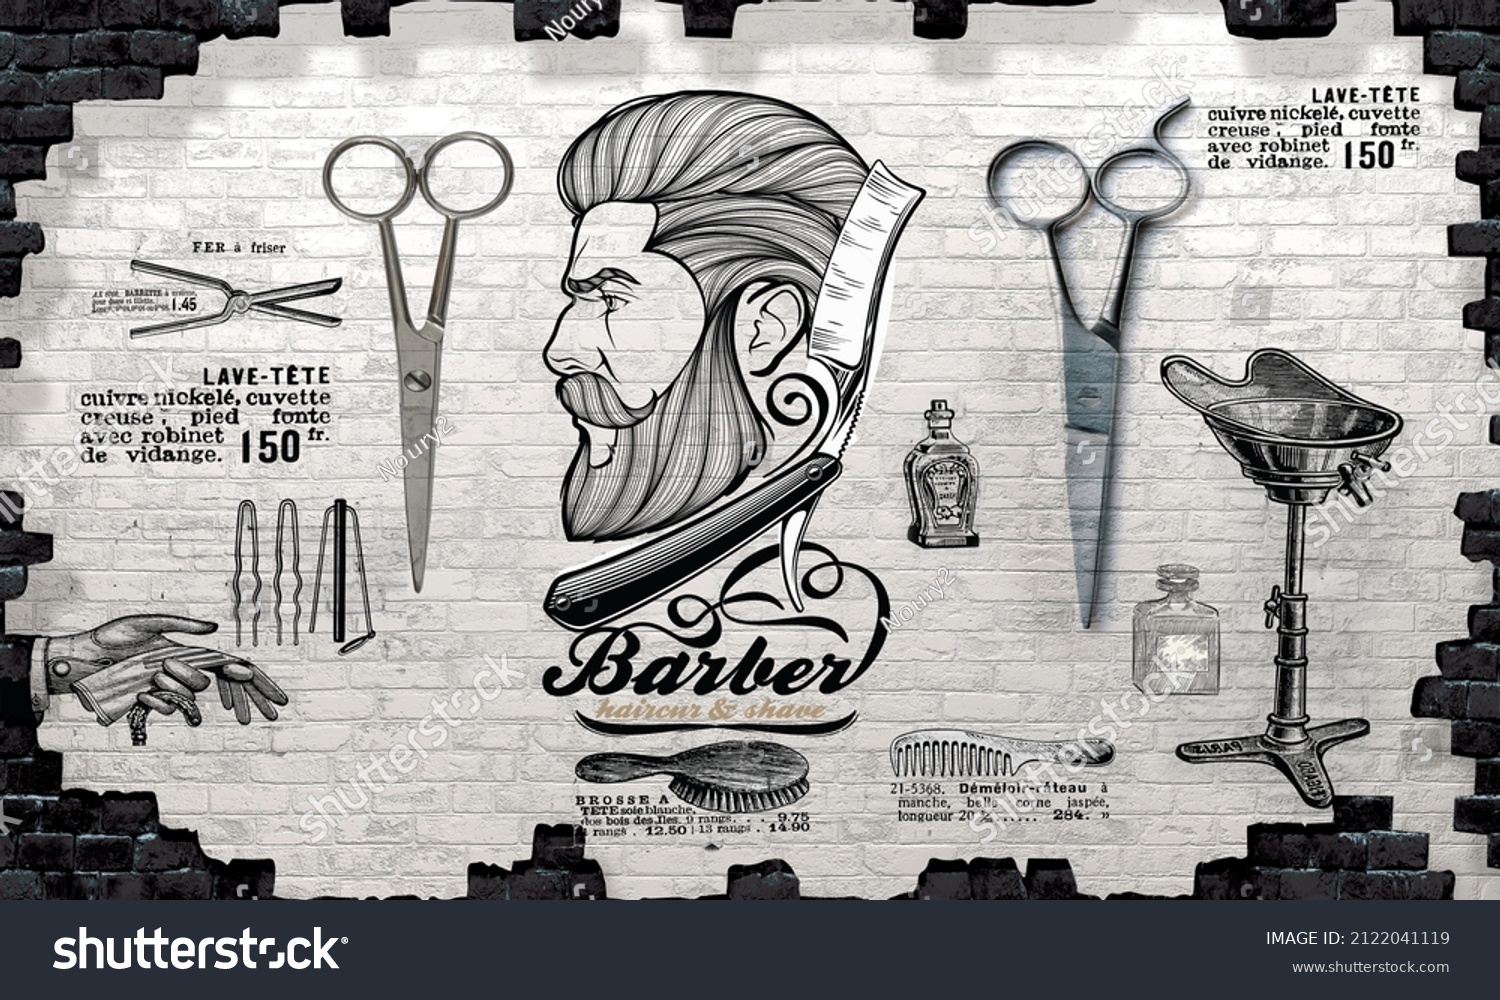 A set of barber tools for barbershops wallpaper mural design